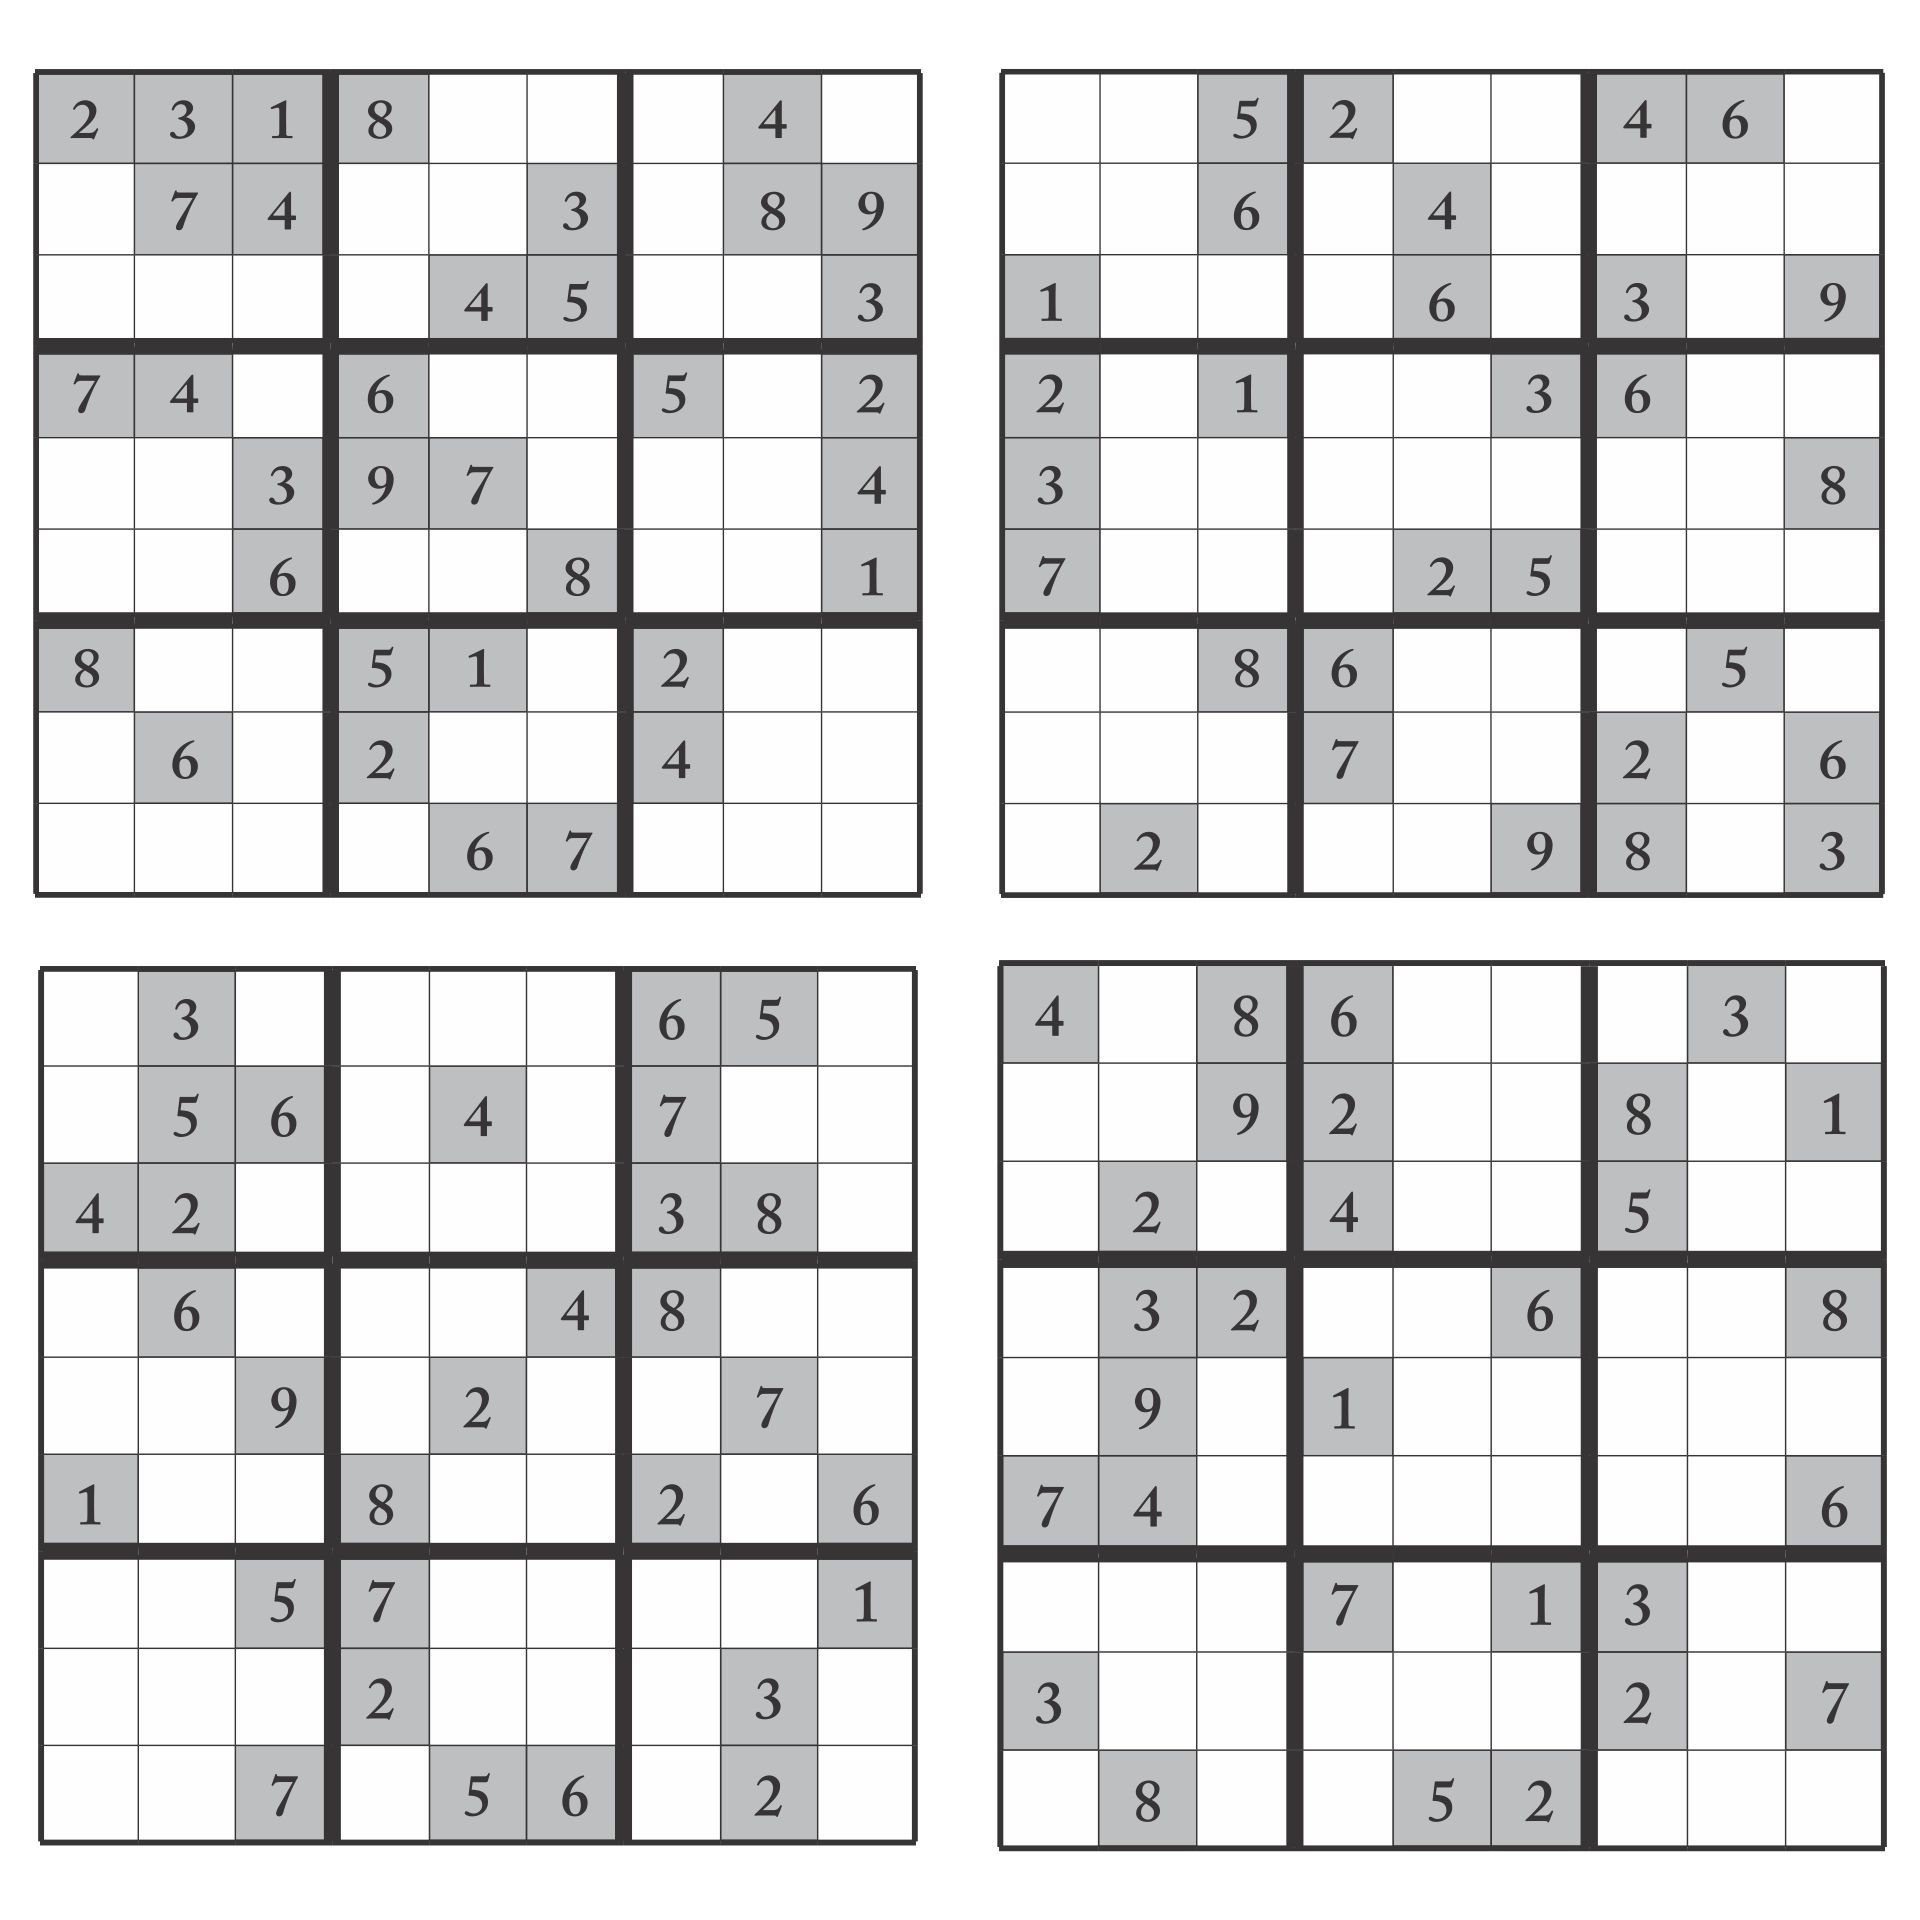 free printable sudoku